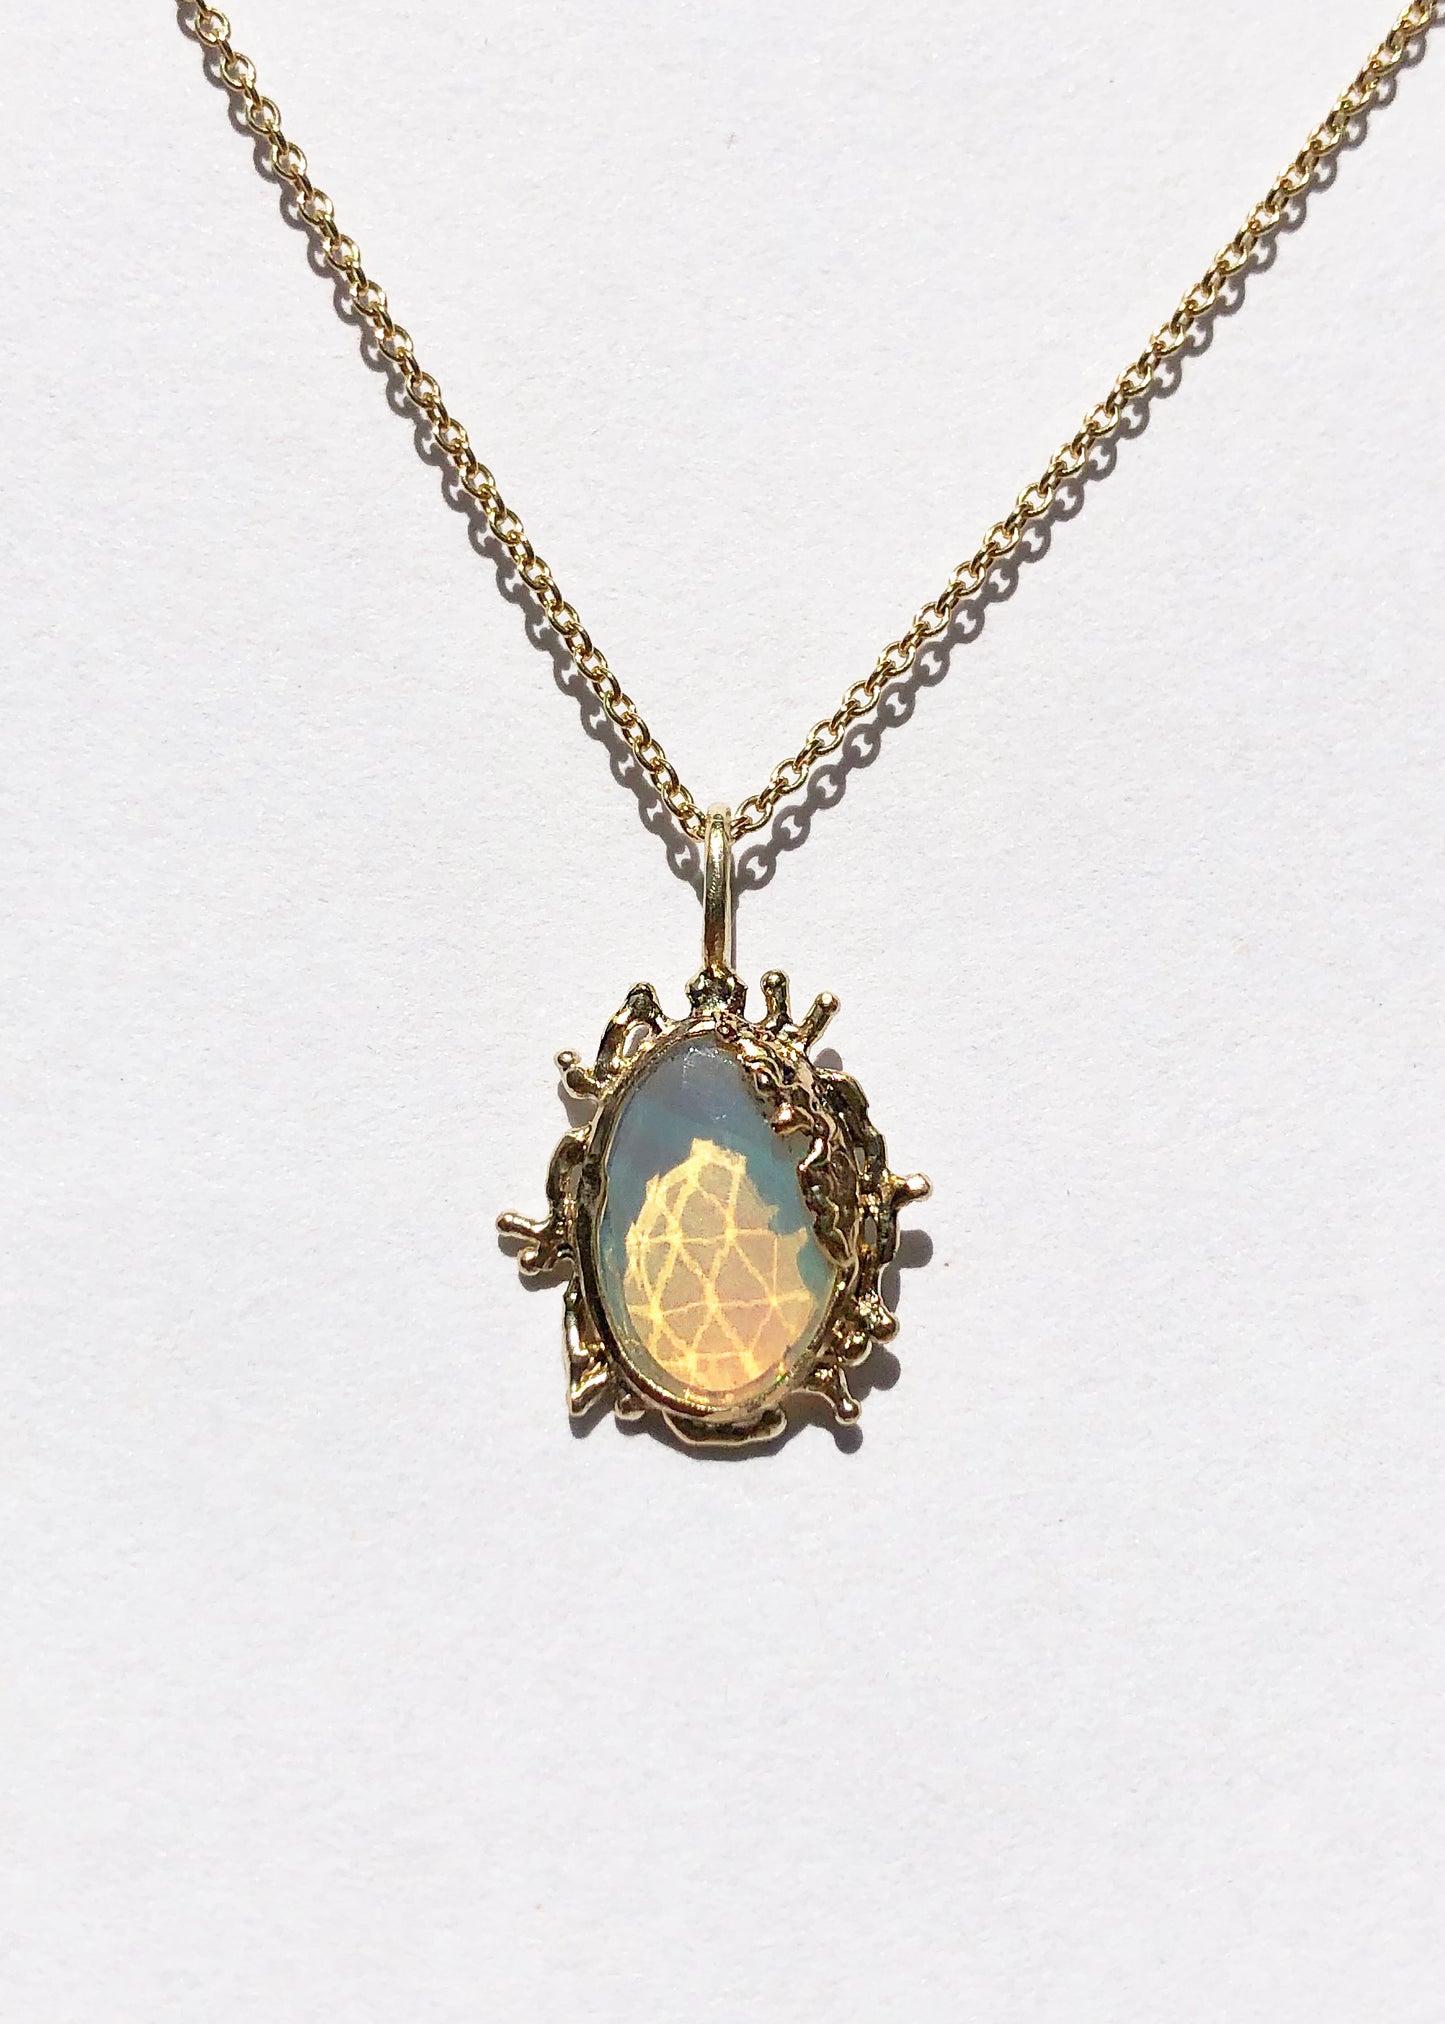 Fairmined gold pendant with opal / SUNBEAM